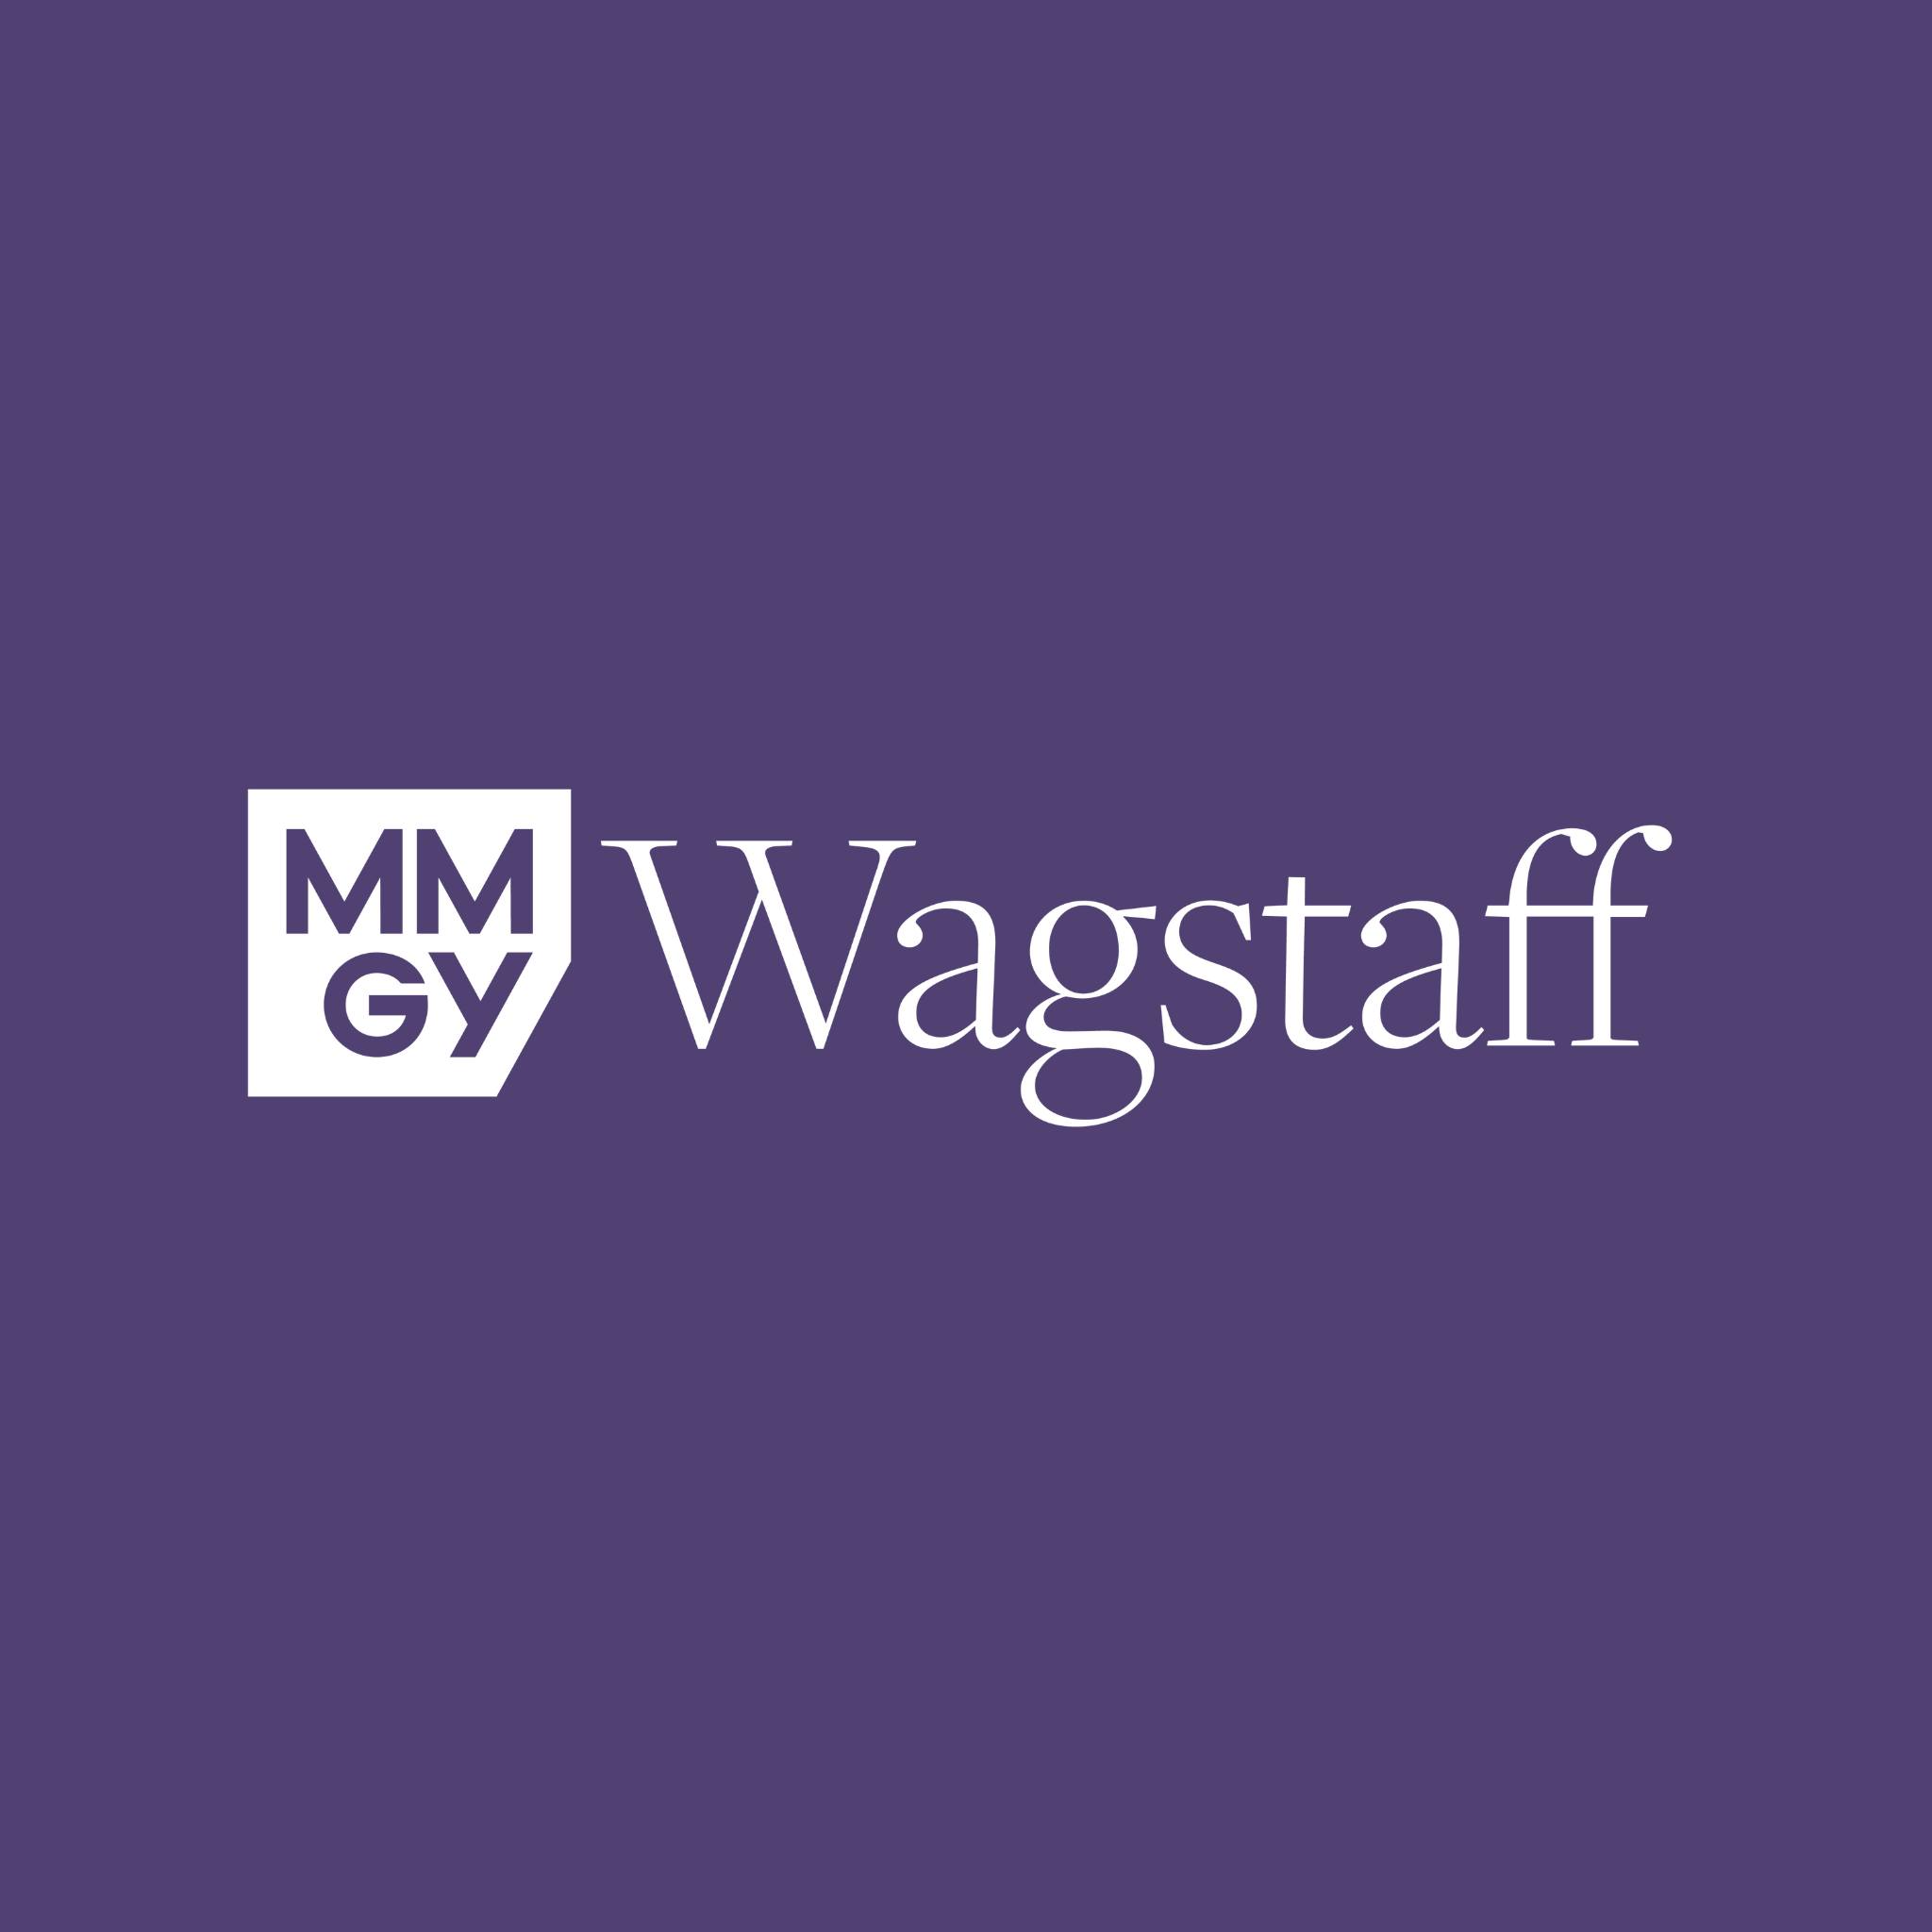 Wagstaff Worldwide